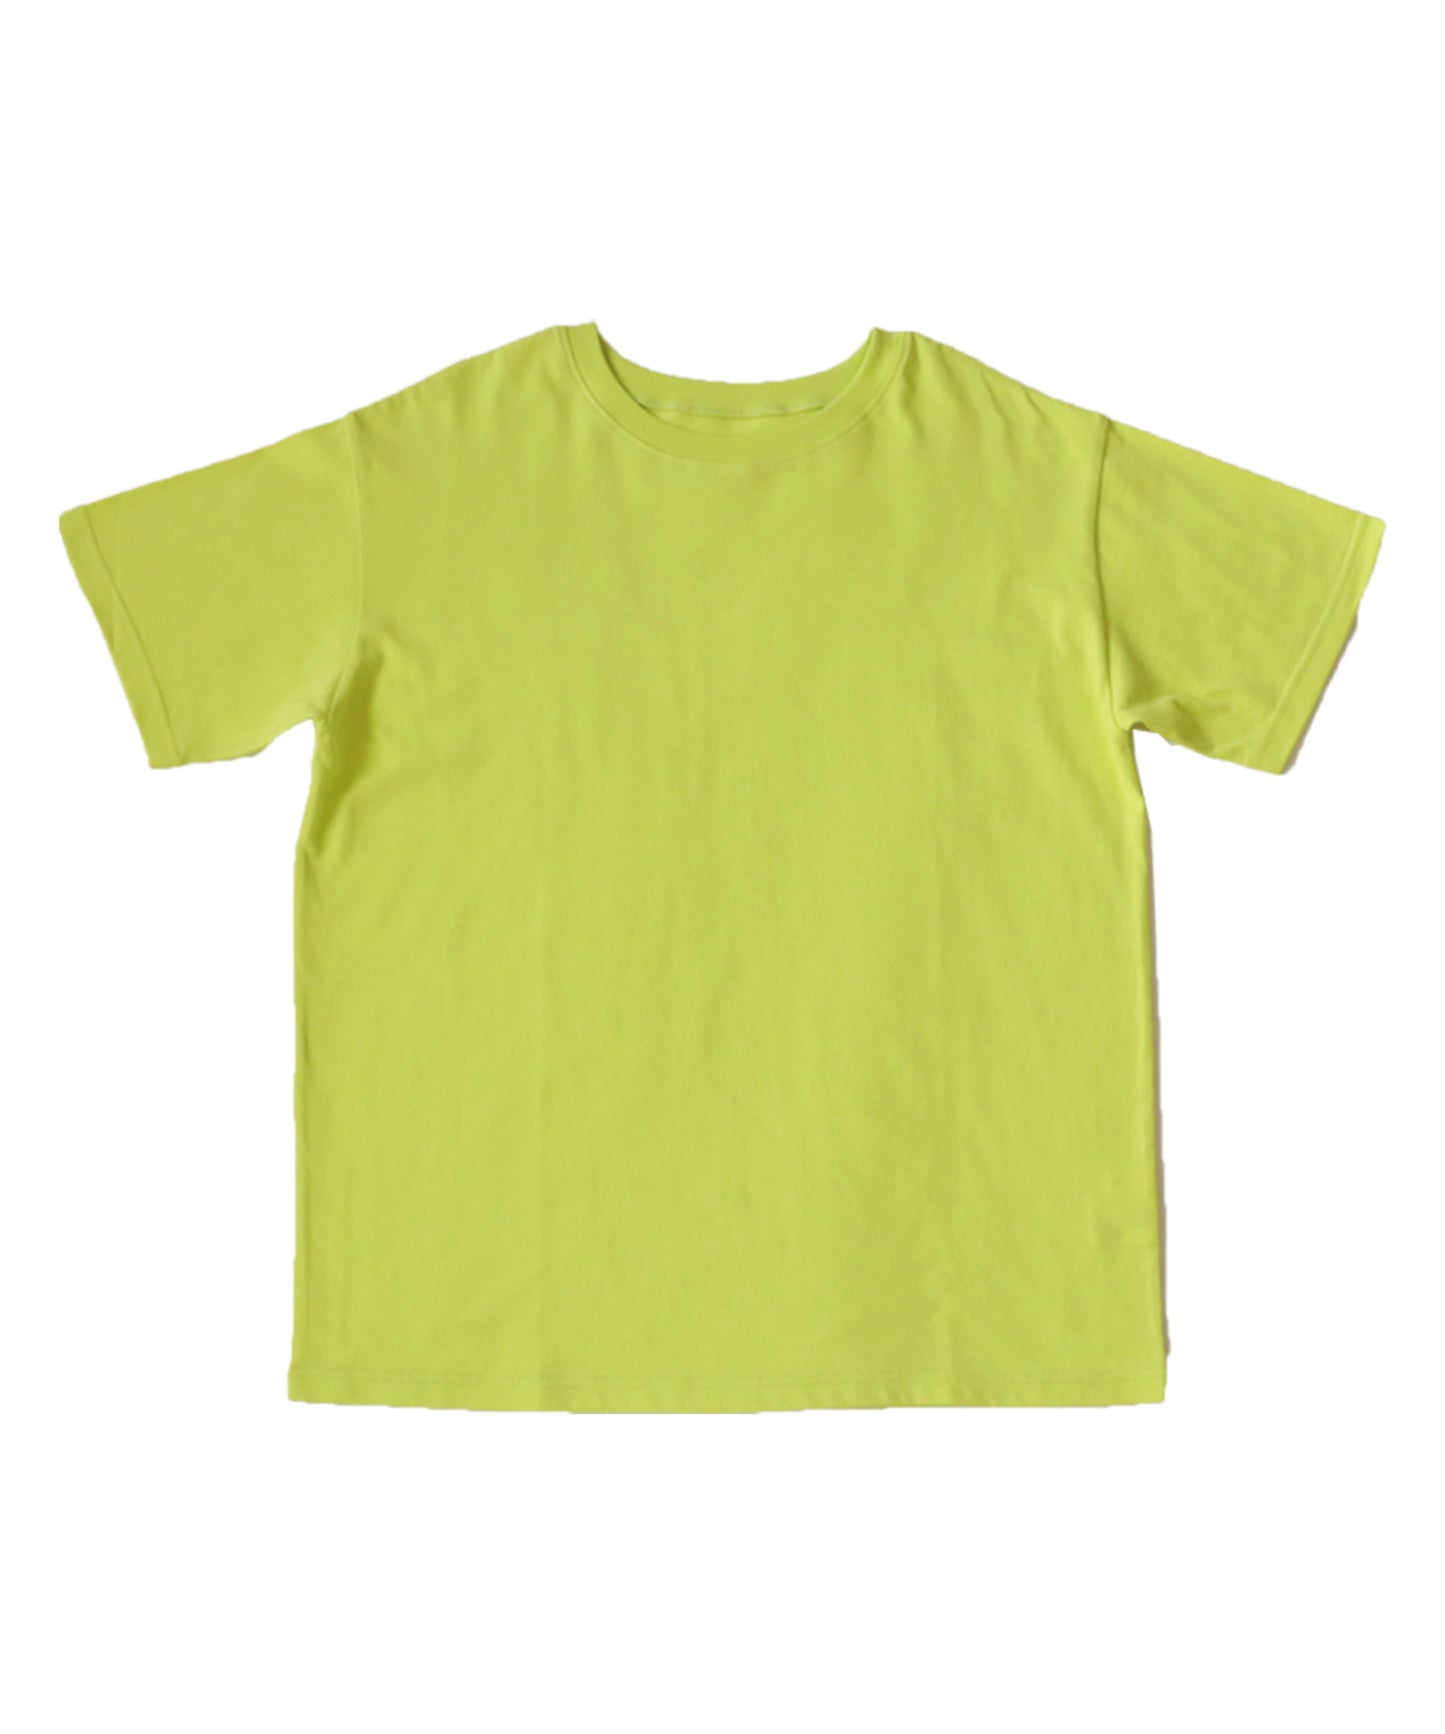 Solid T -shirt T -shirt Ladies Tops Short Sleeve Cotton 100